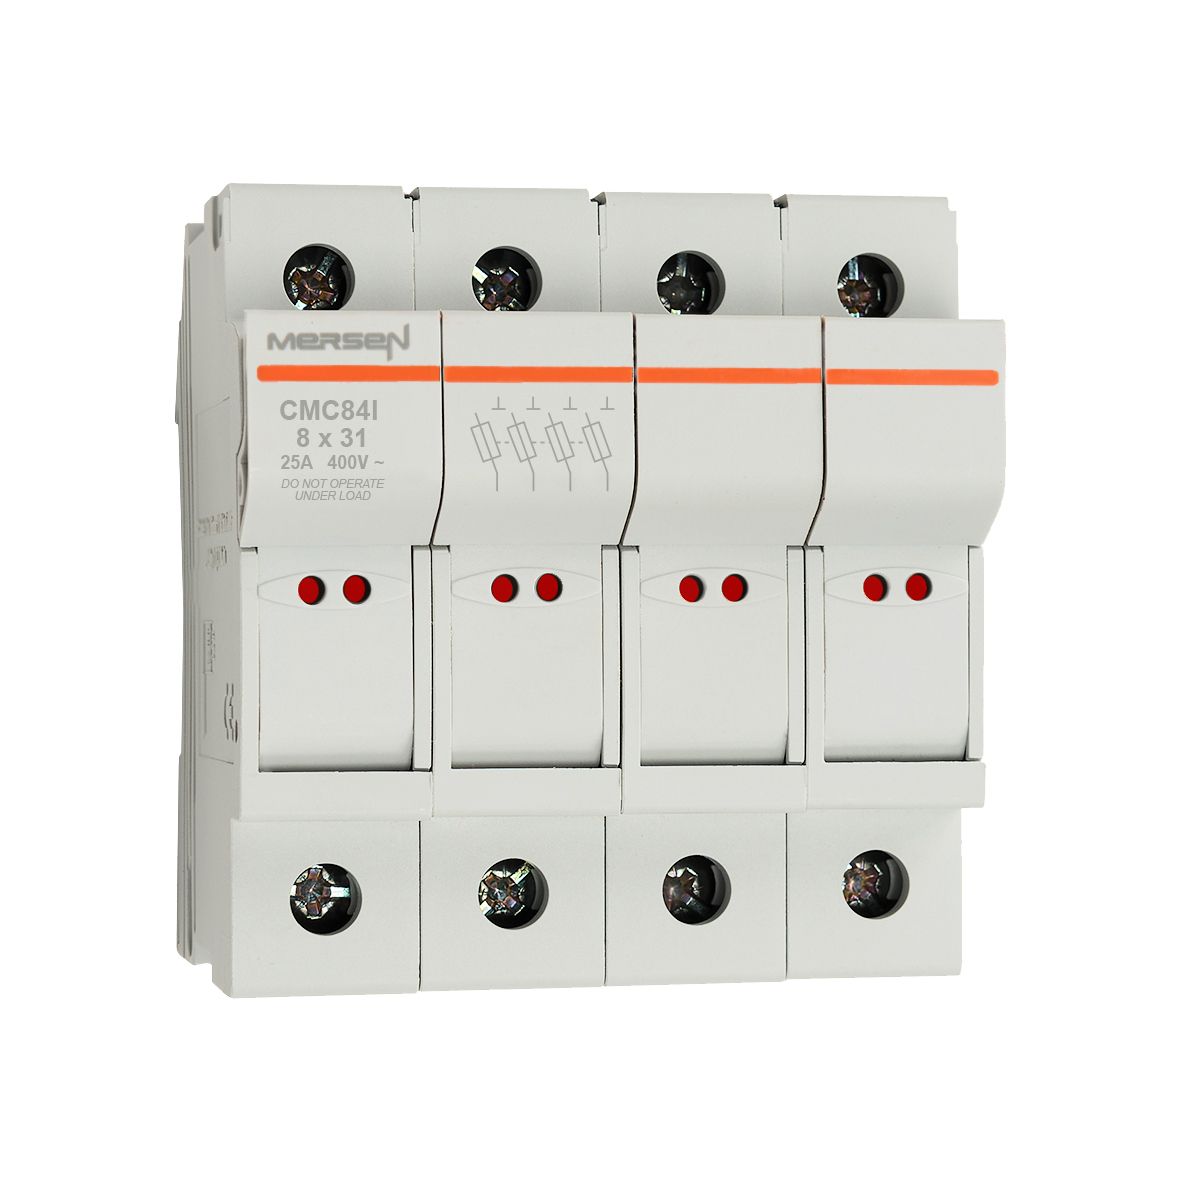 L1062679 - CMC8 modular fuse holder,IEC, 4P,indicator light,8x32,DIN rail mounting,IP20